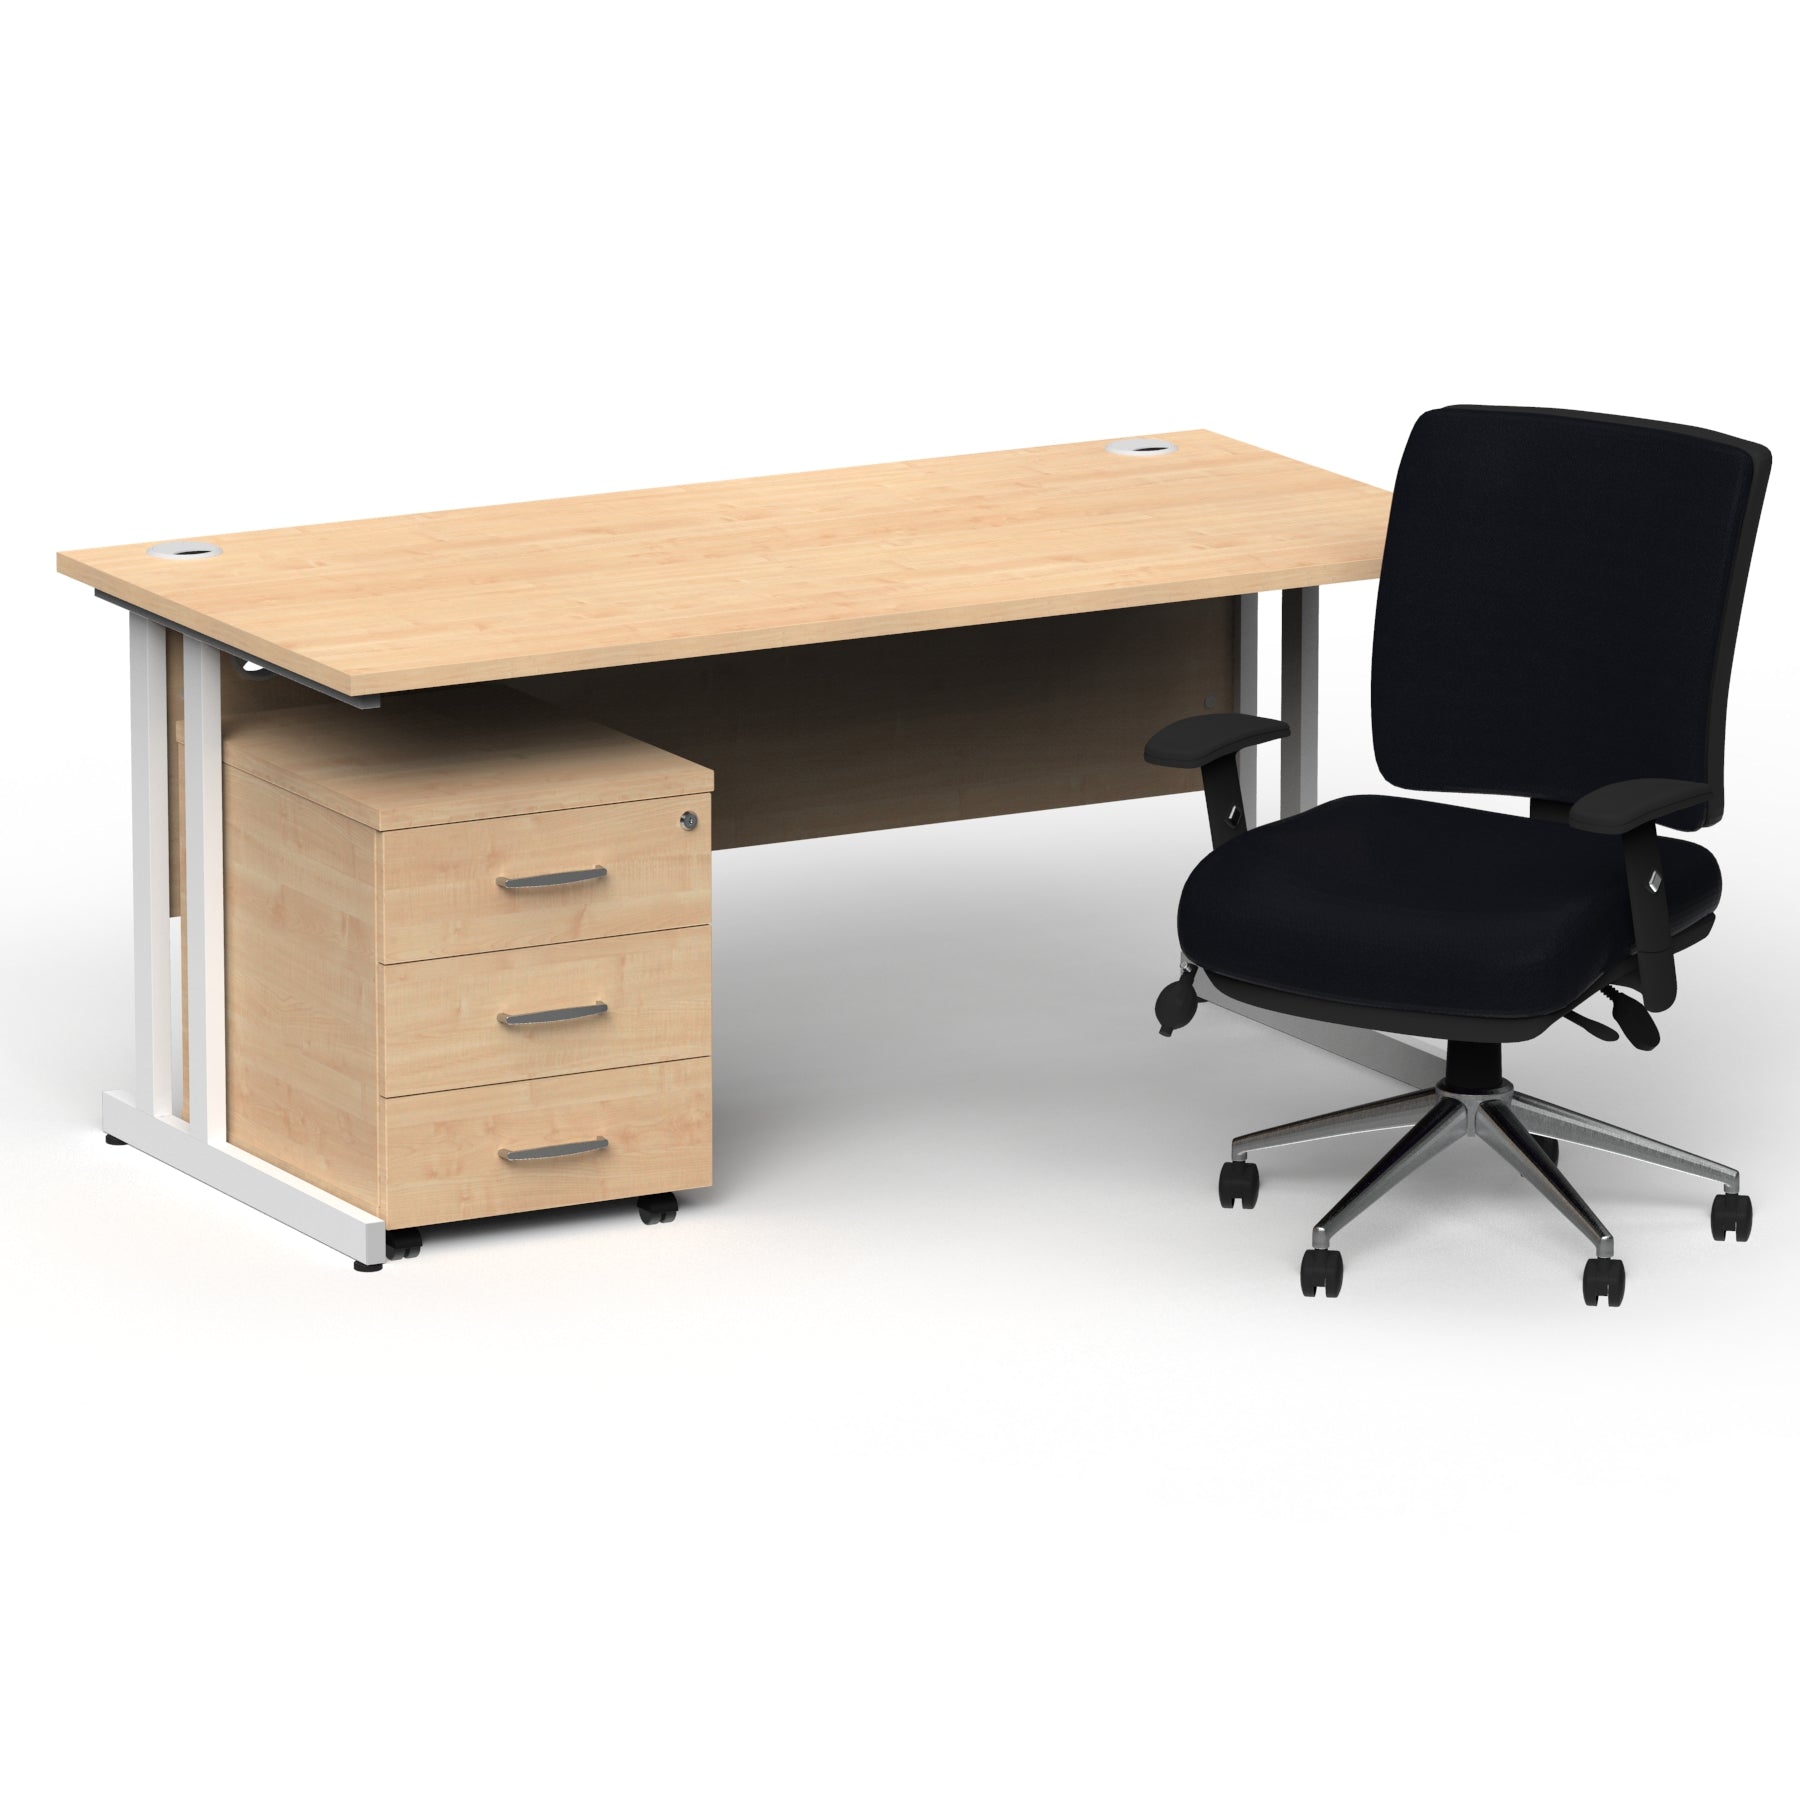 Impulse 1600mm Cantilever Desk & Mobile Pedestal with Chiro Medium Back Black Operator Chair - 5-Year Furniture Guarantee